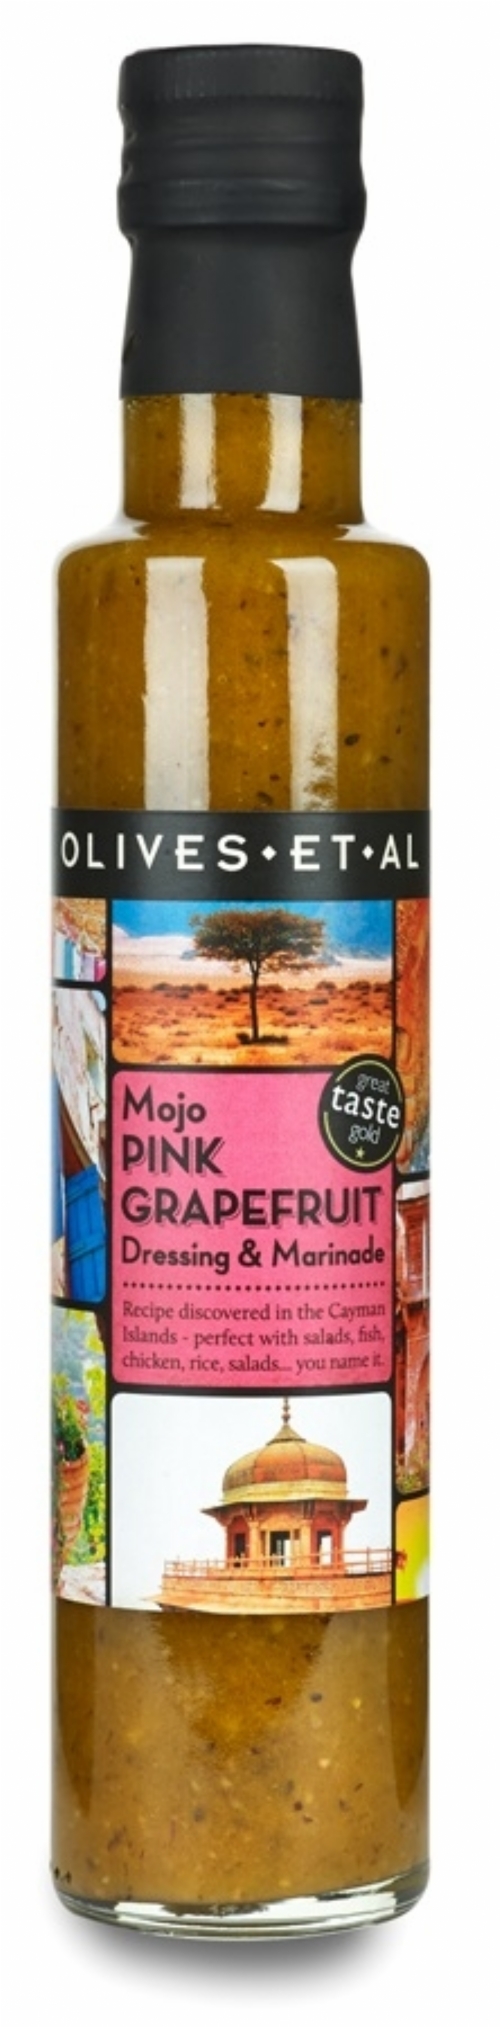 OLIVES ET AL Mojo Pink Grapefruit Dressing & Marinade 250ml